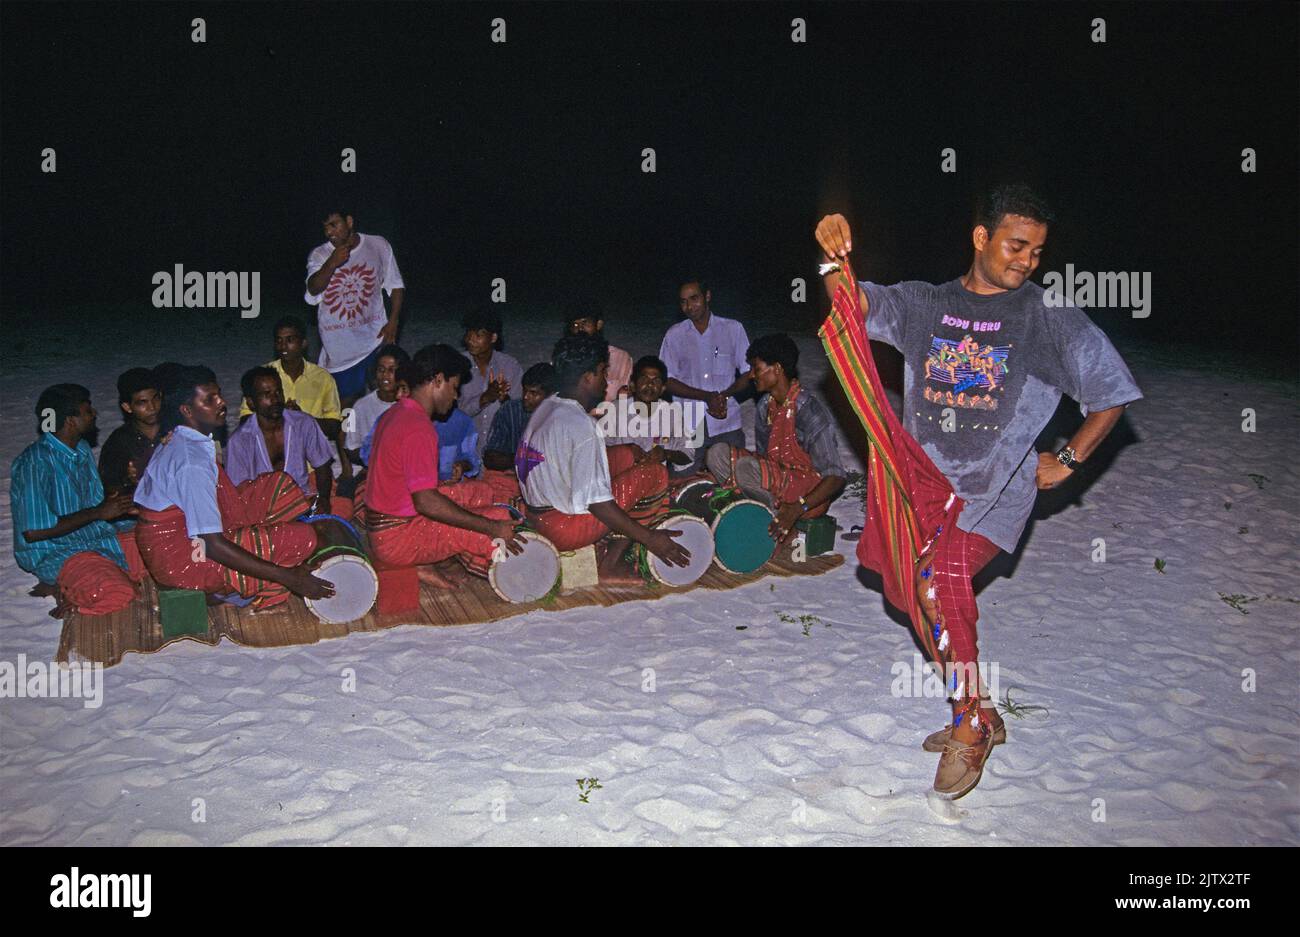 Maldivian men playing Bodu Beru, tradional song and dancing, home island Mahembadhoo, Maldives, Indian ocean, Asia Stock Photo